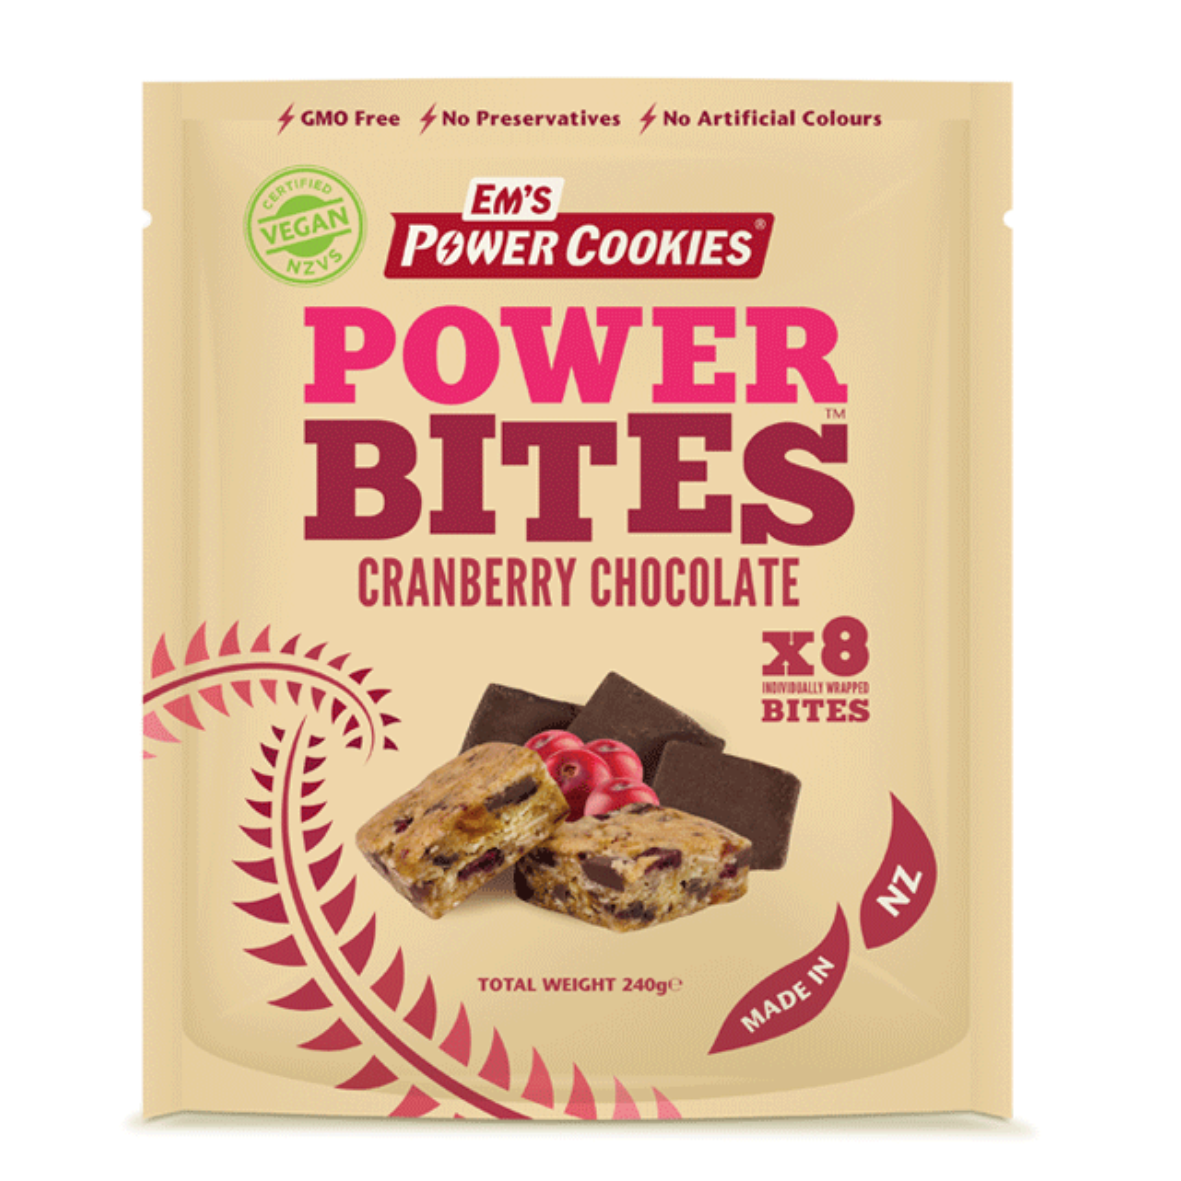 Em's Power Cookies Cranberry Chocolate Vegan Power Bites